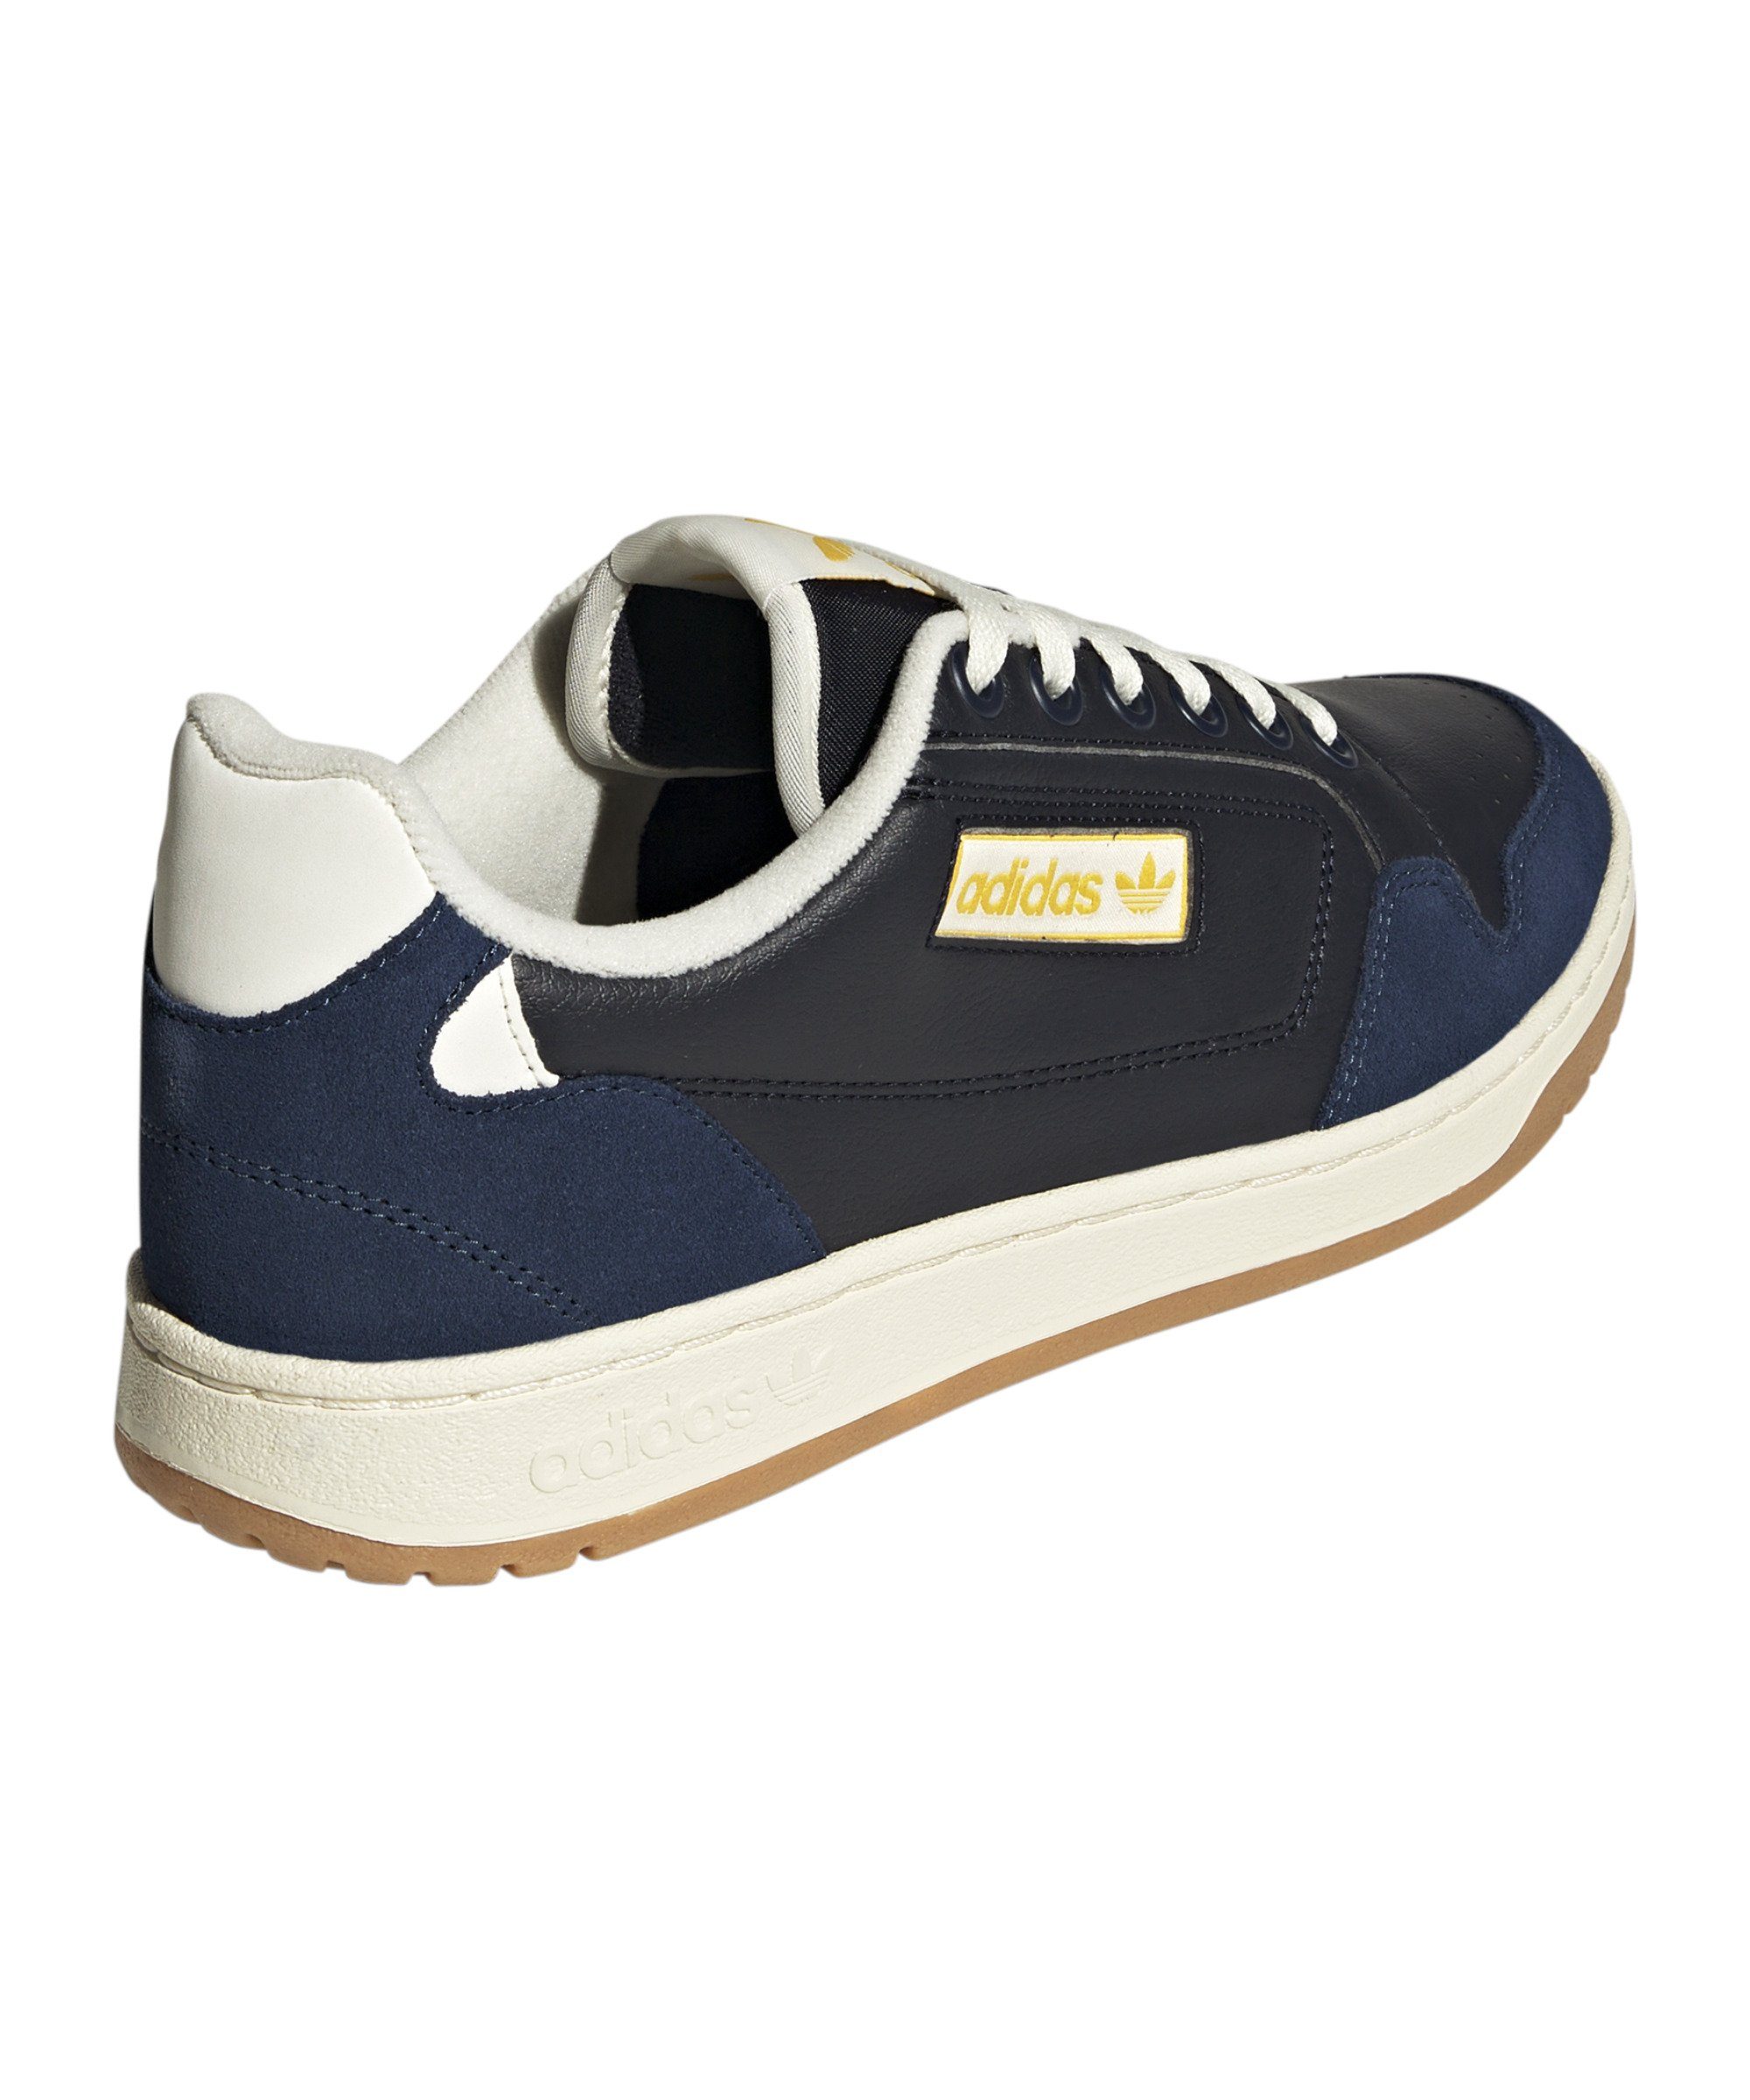 90 blaubraun NY Originals adidas Sneaker